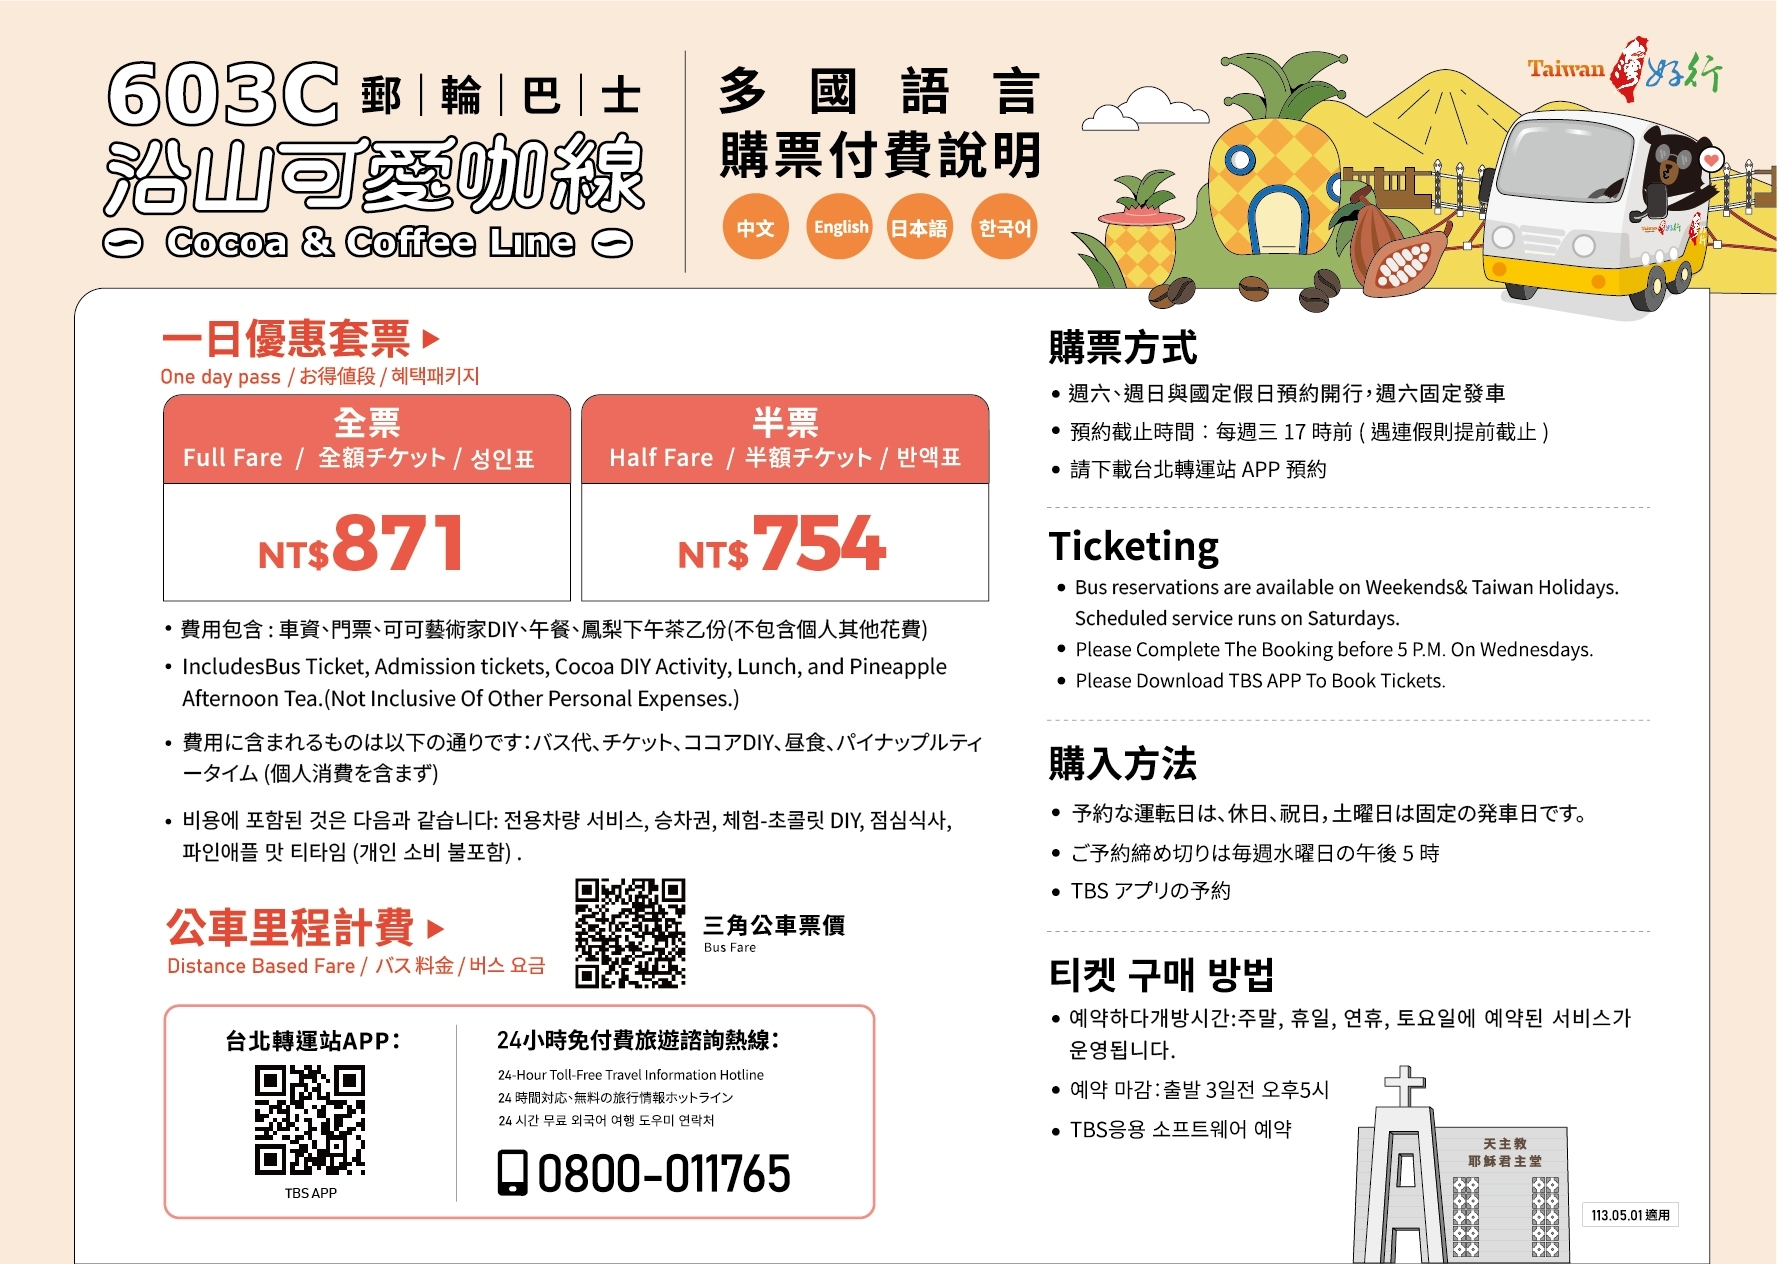 603C 沿山可愛咖線-多國語言購票付費說明